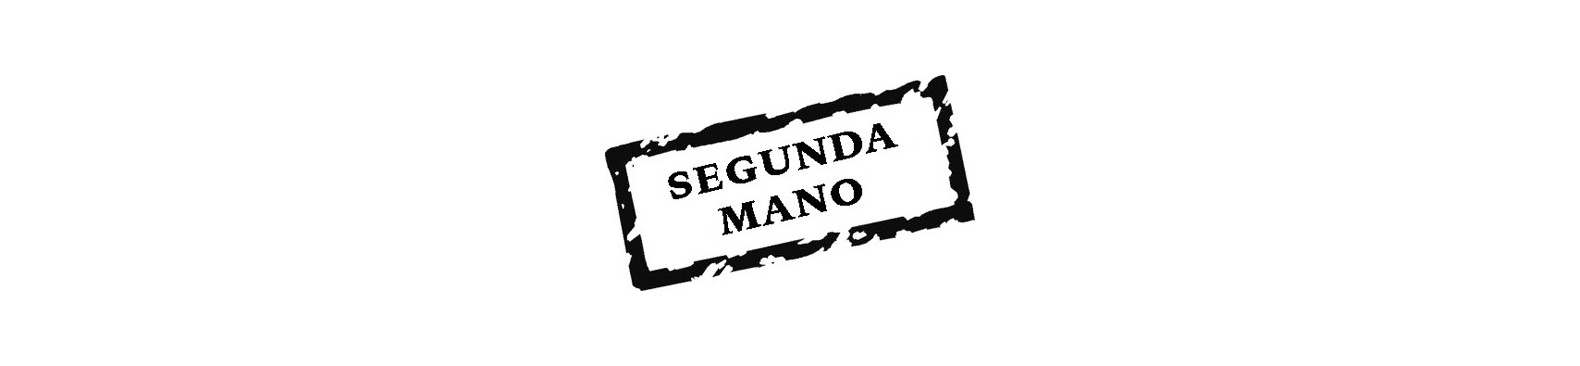 SEGUNDA MANO